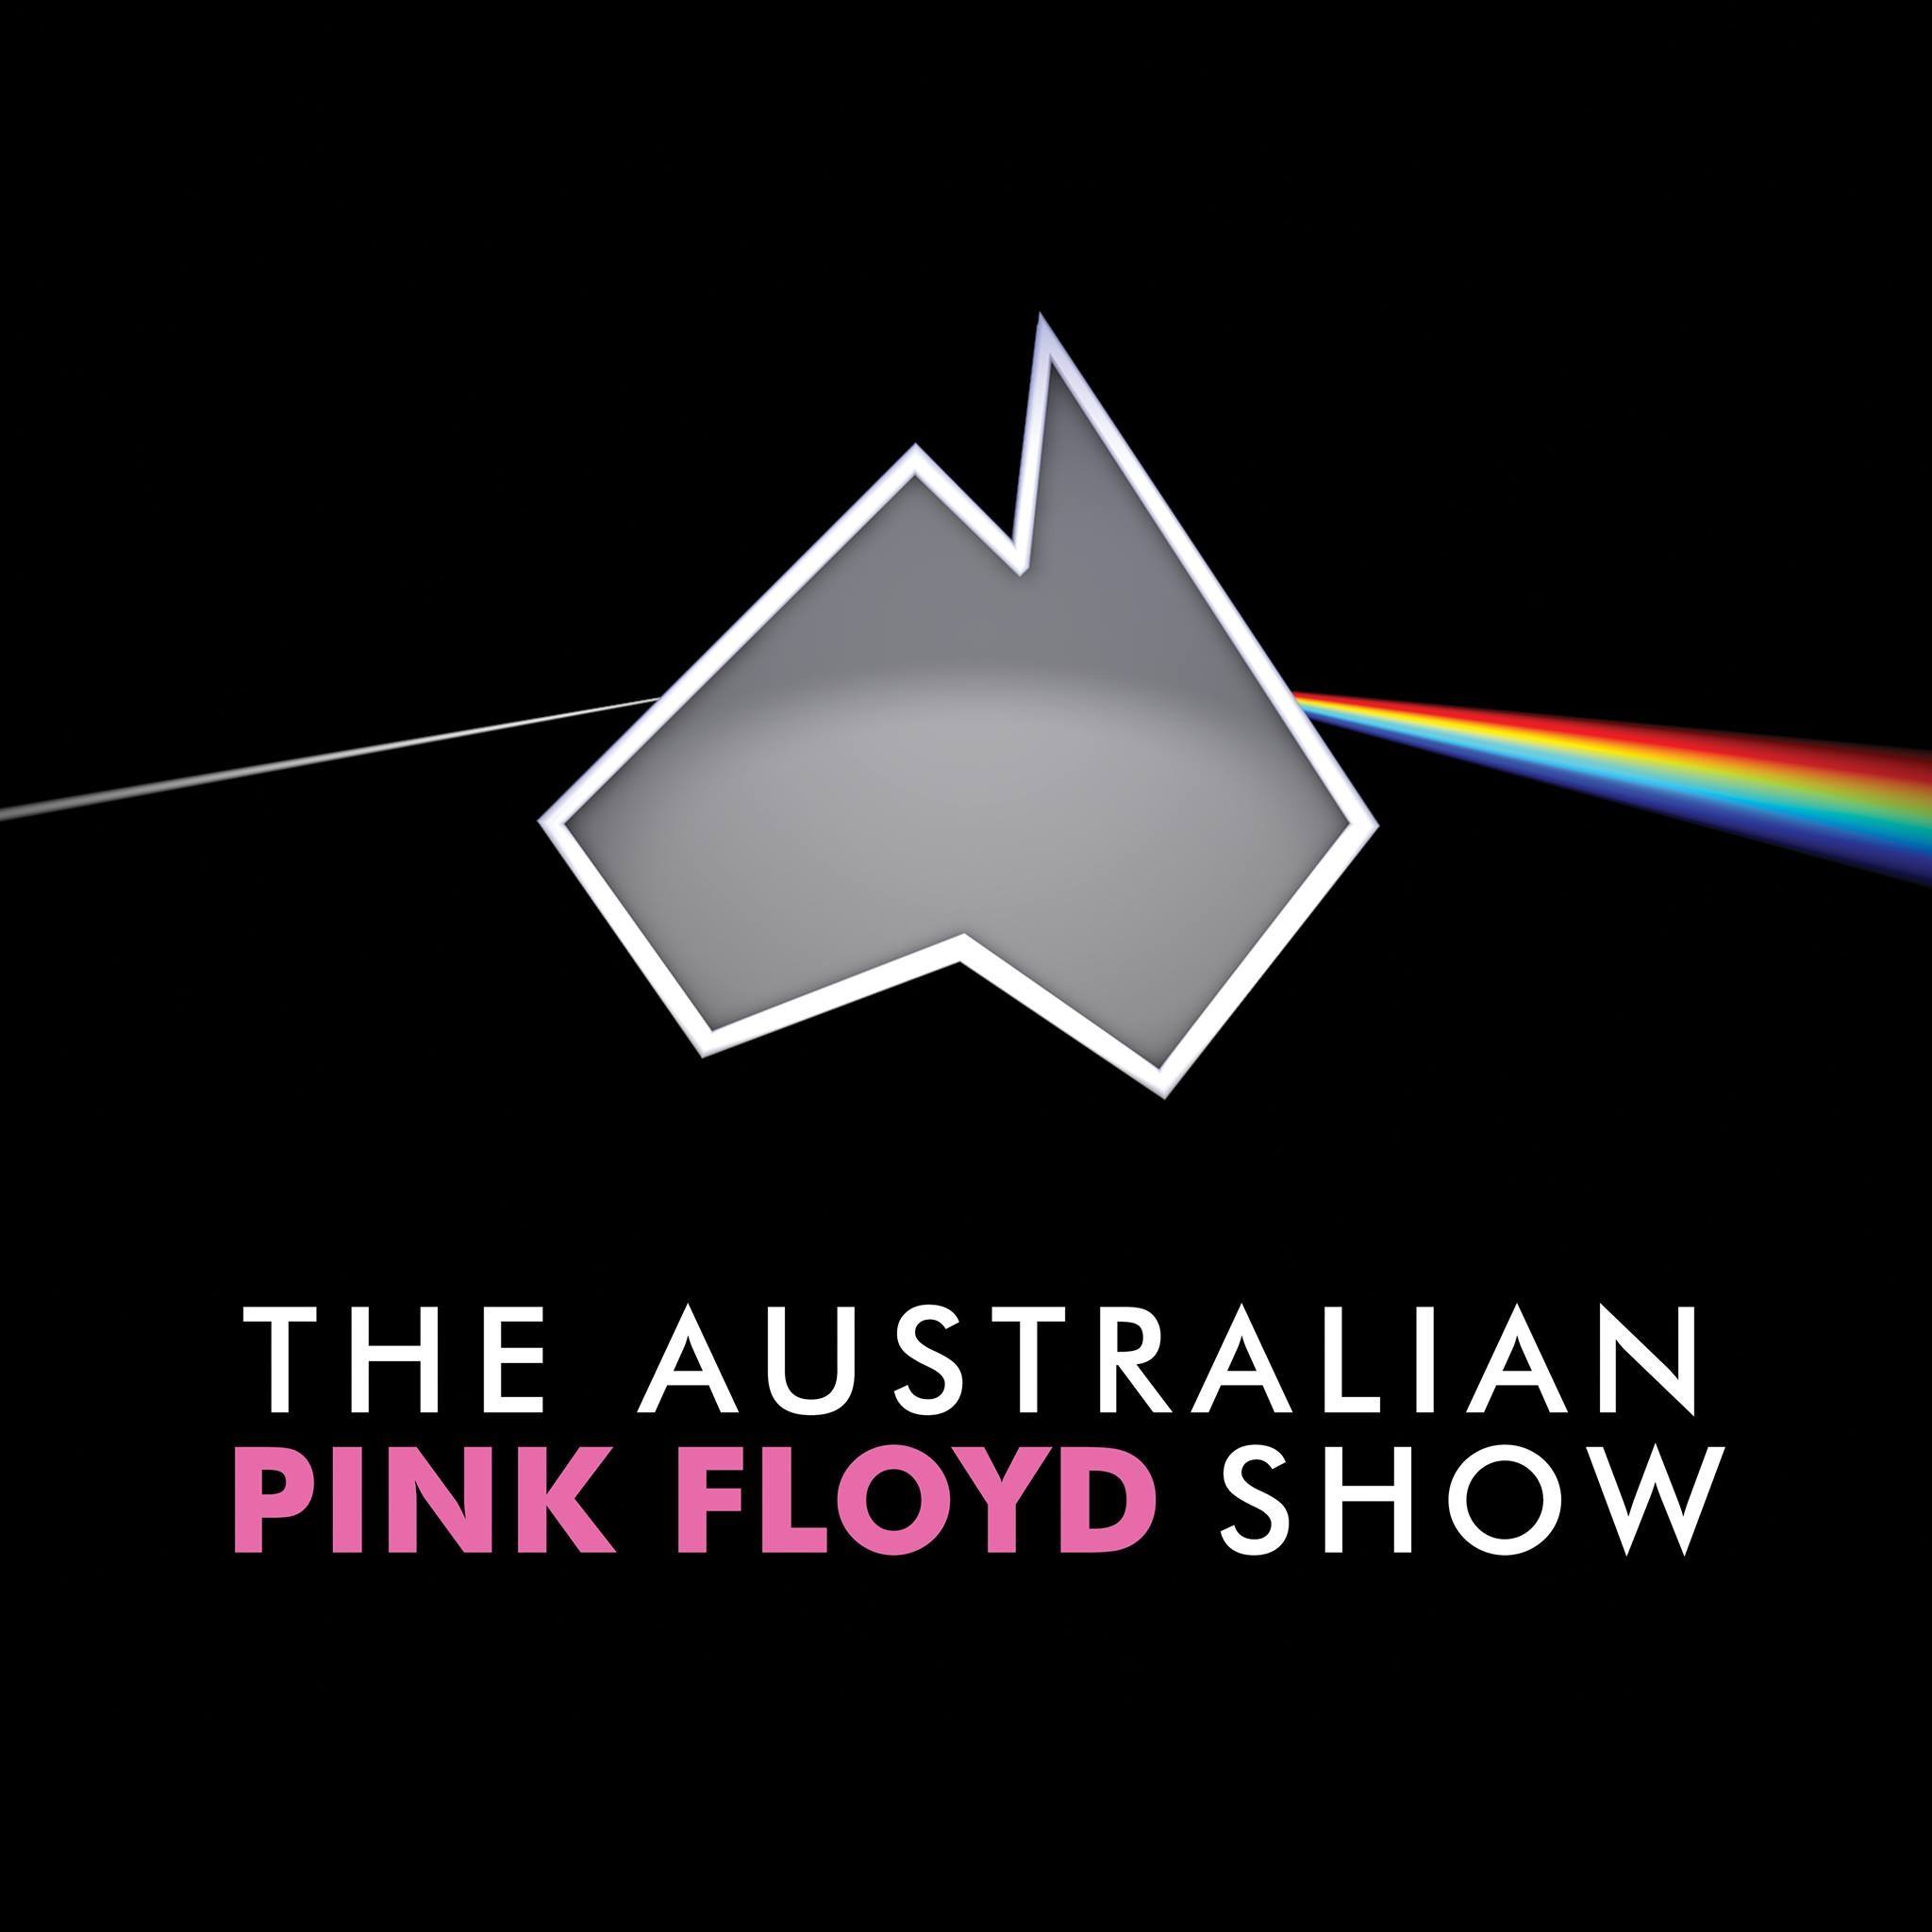 The Australian Pink Floyd Show Las Vegas